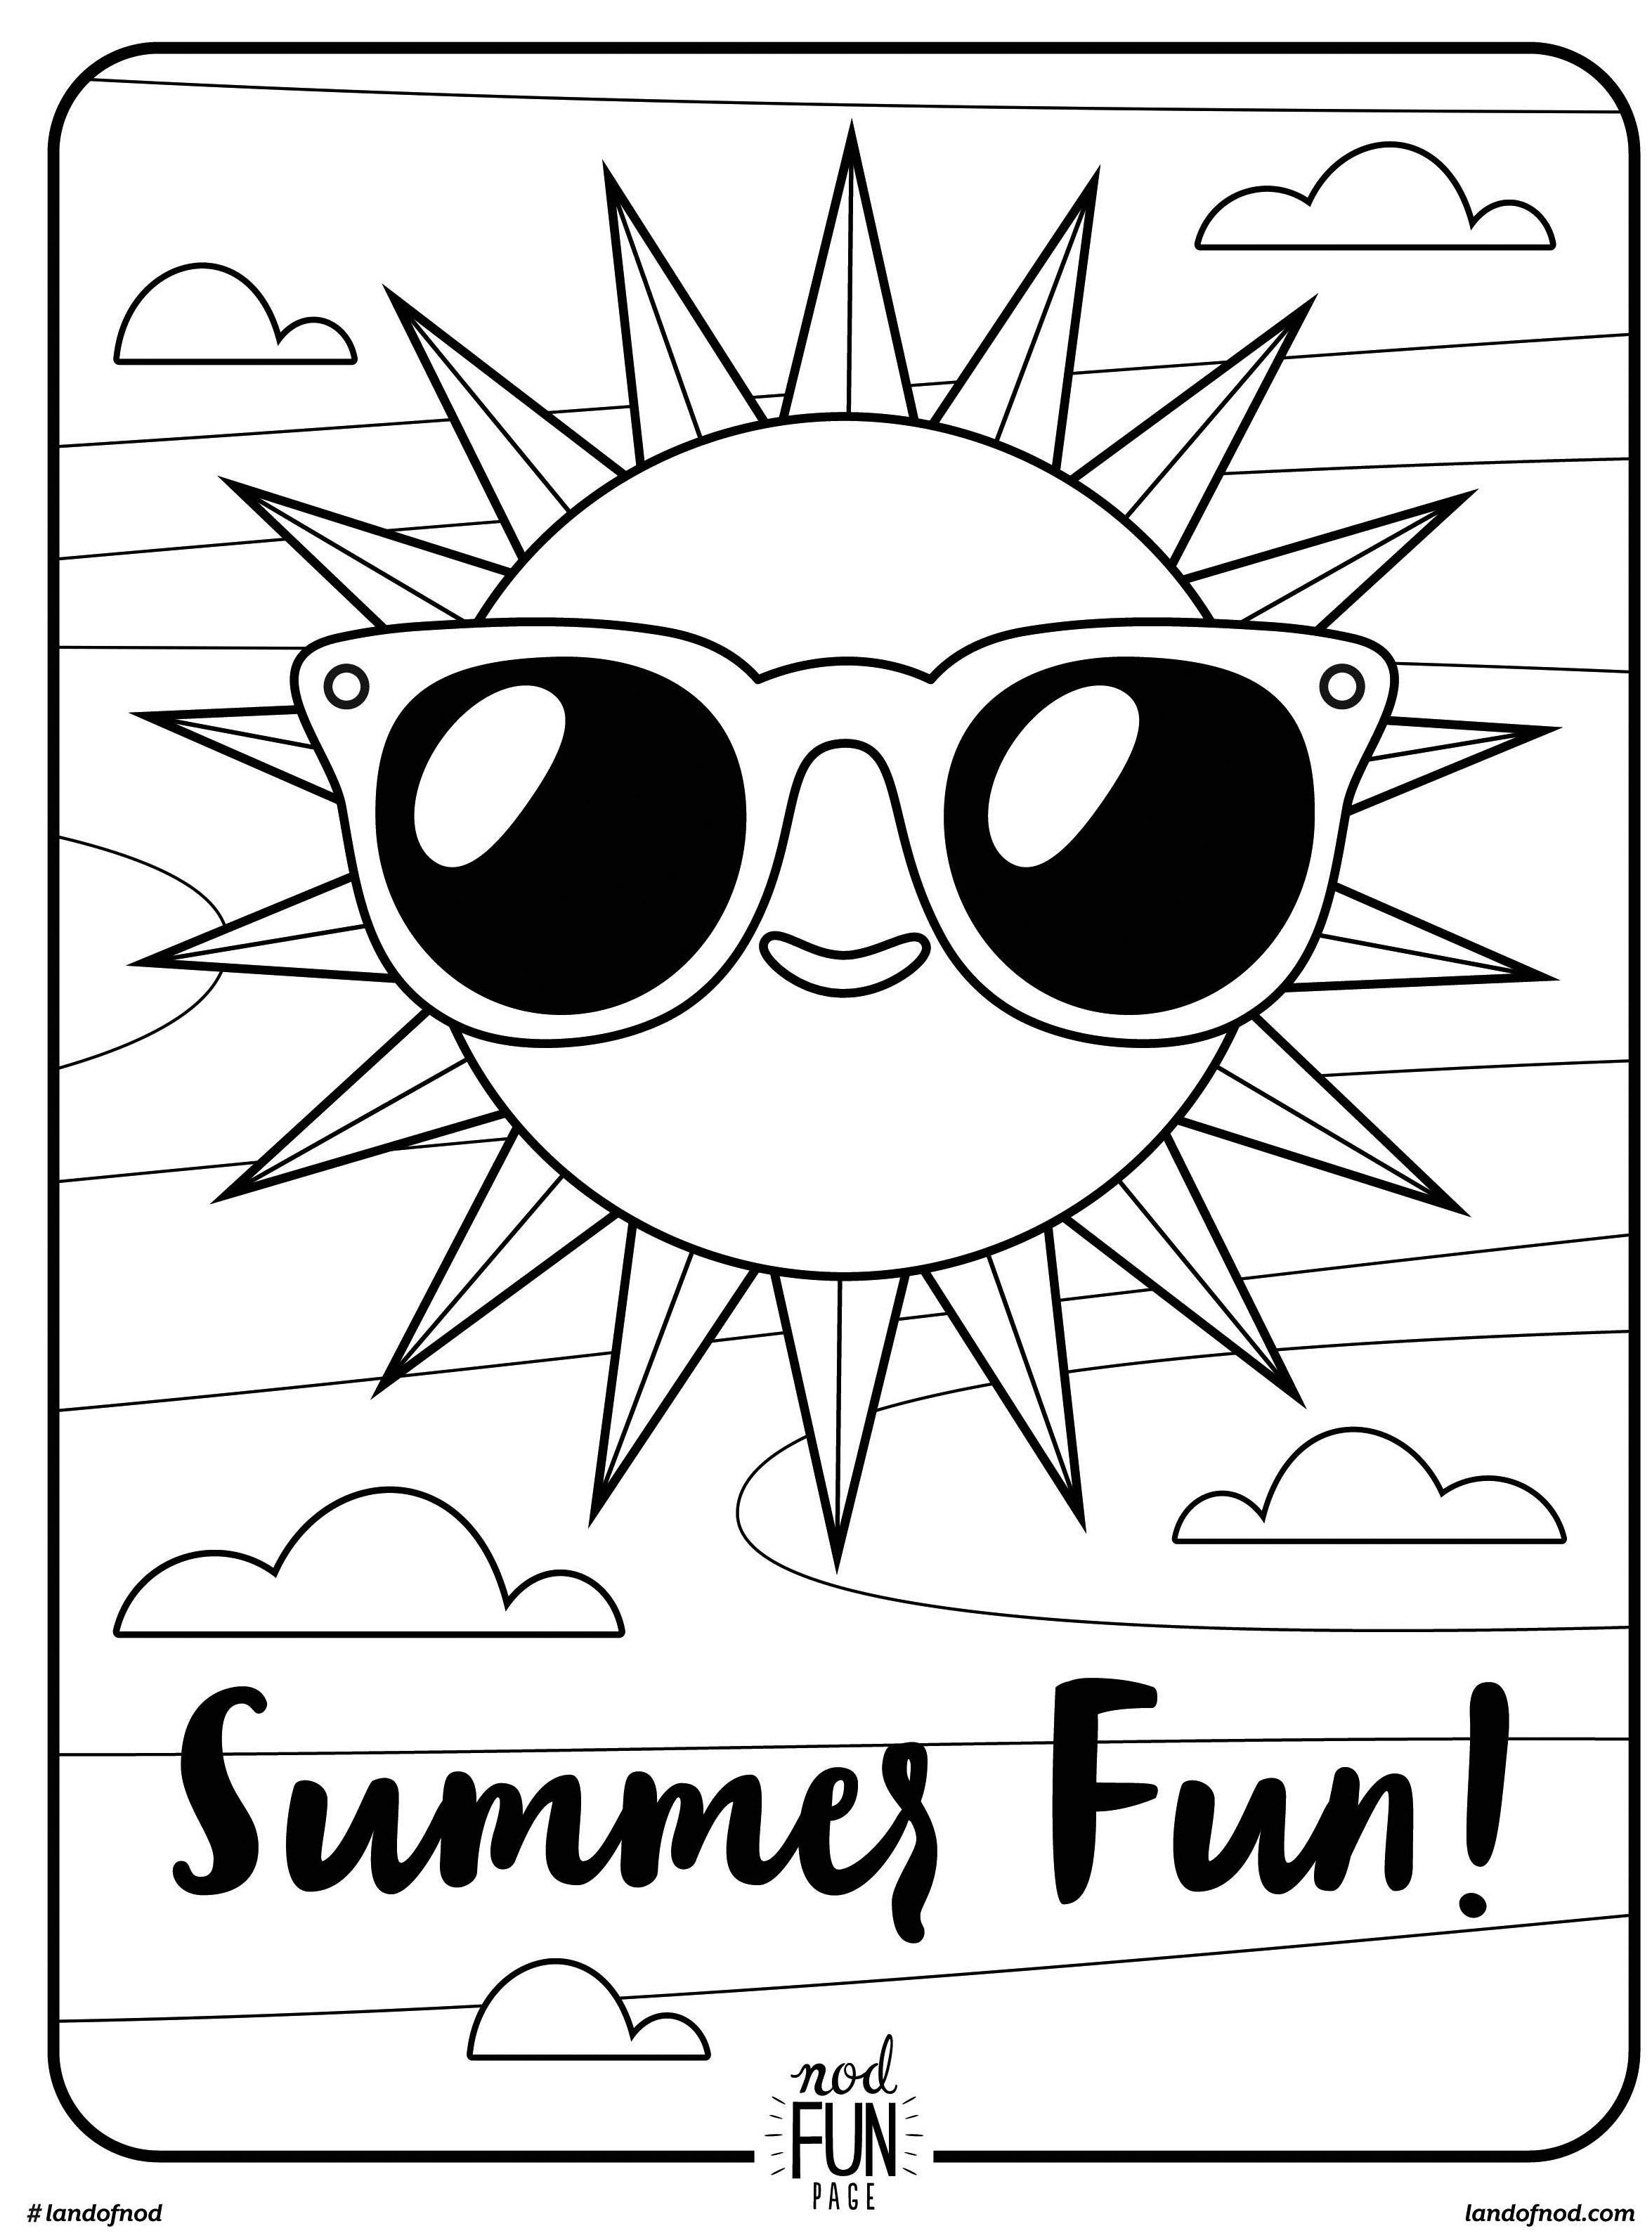 Free Printable Coloring Page: Summer Fun | Summer | Pinterest - Summer Coloring Sheets Free Printable